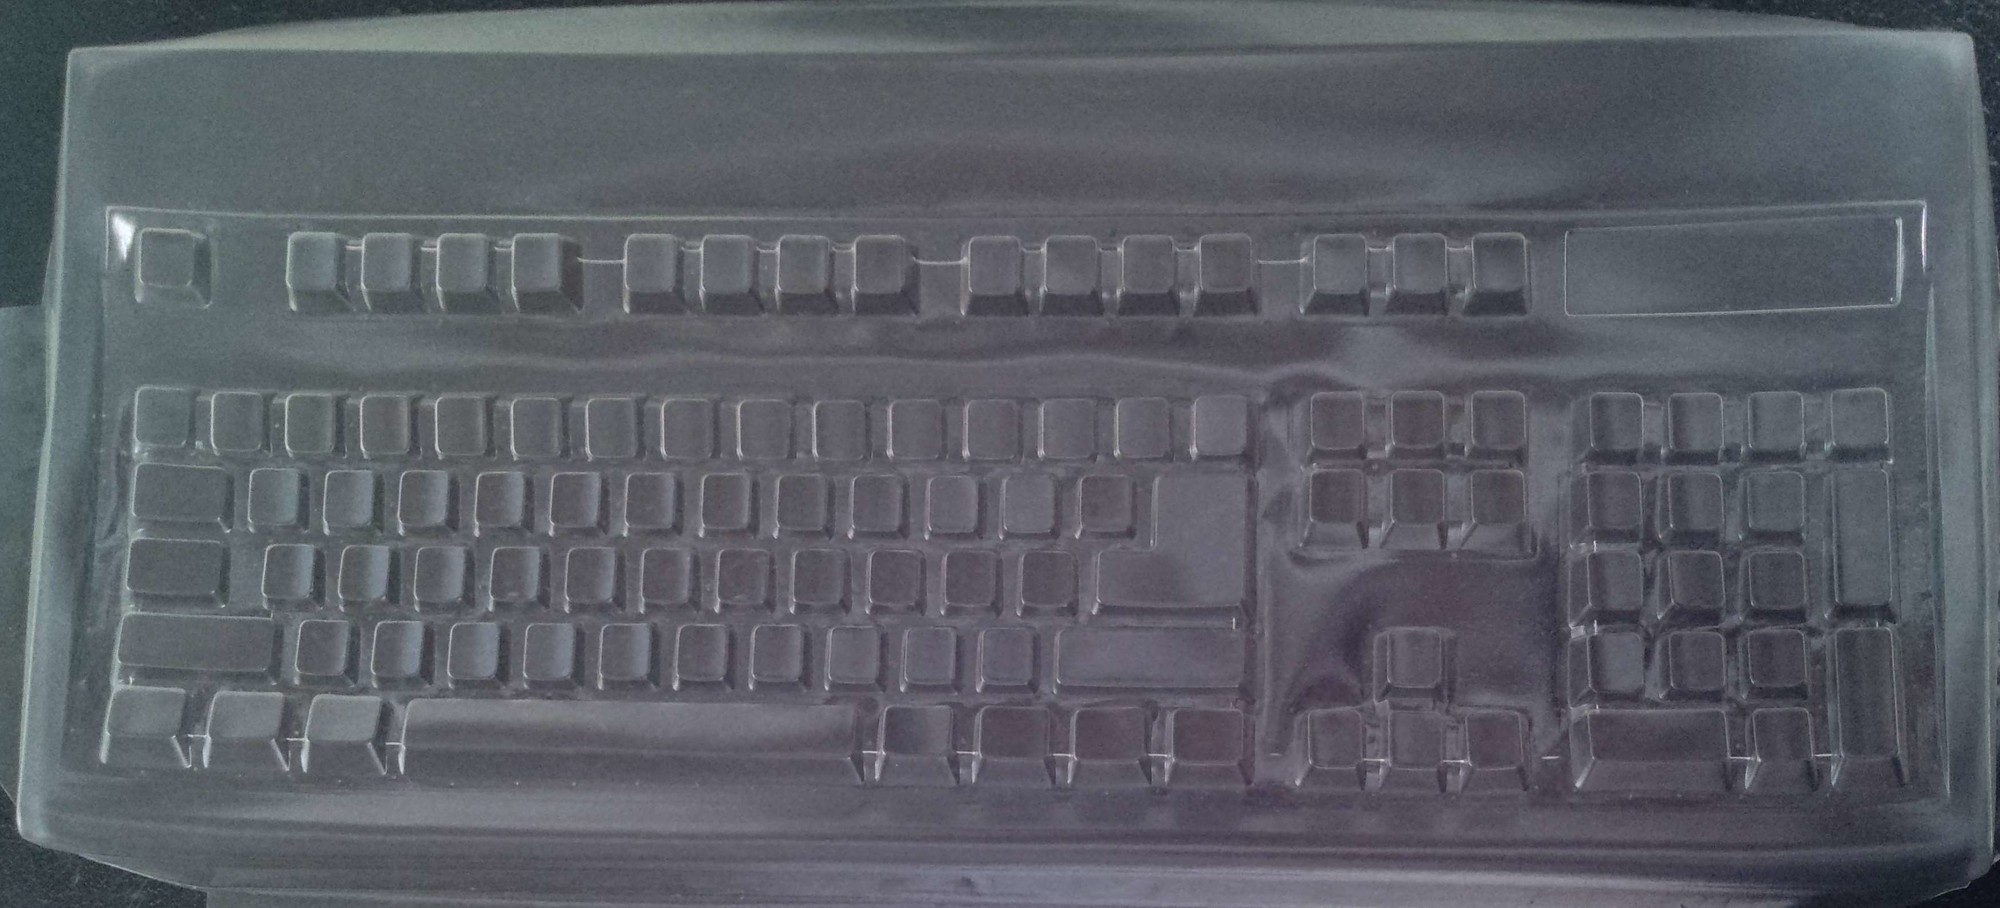 Key Tronic 3601QLC Win Keyboard Cover